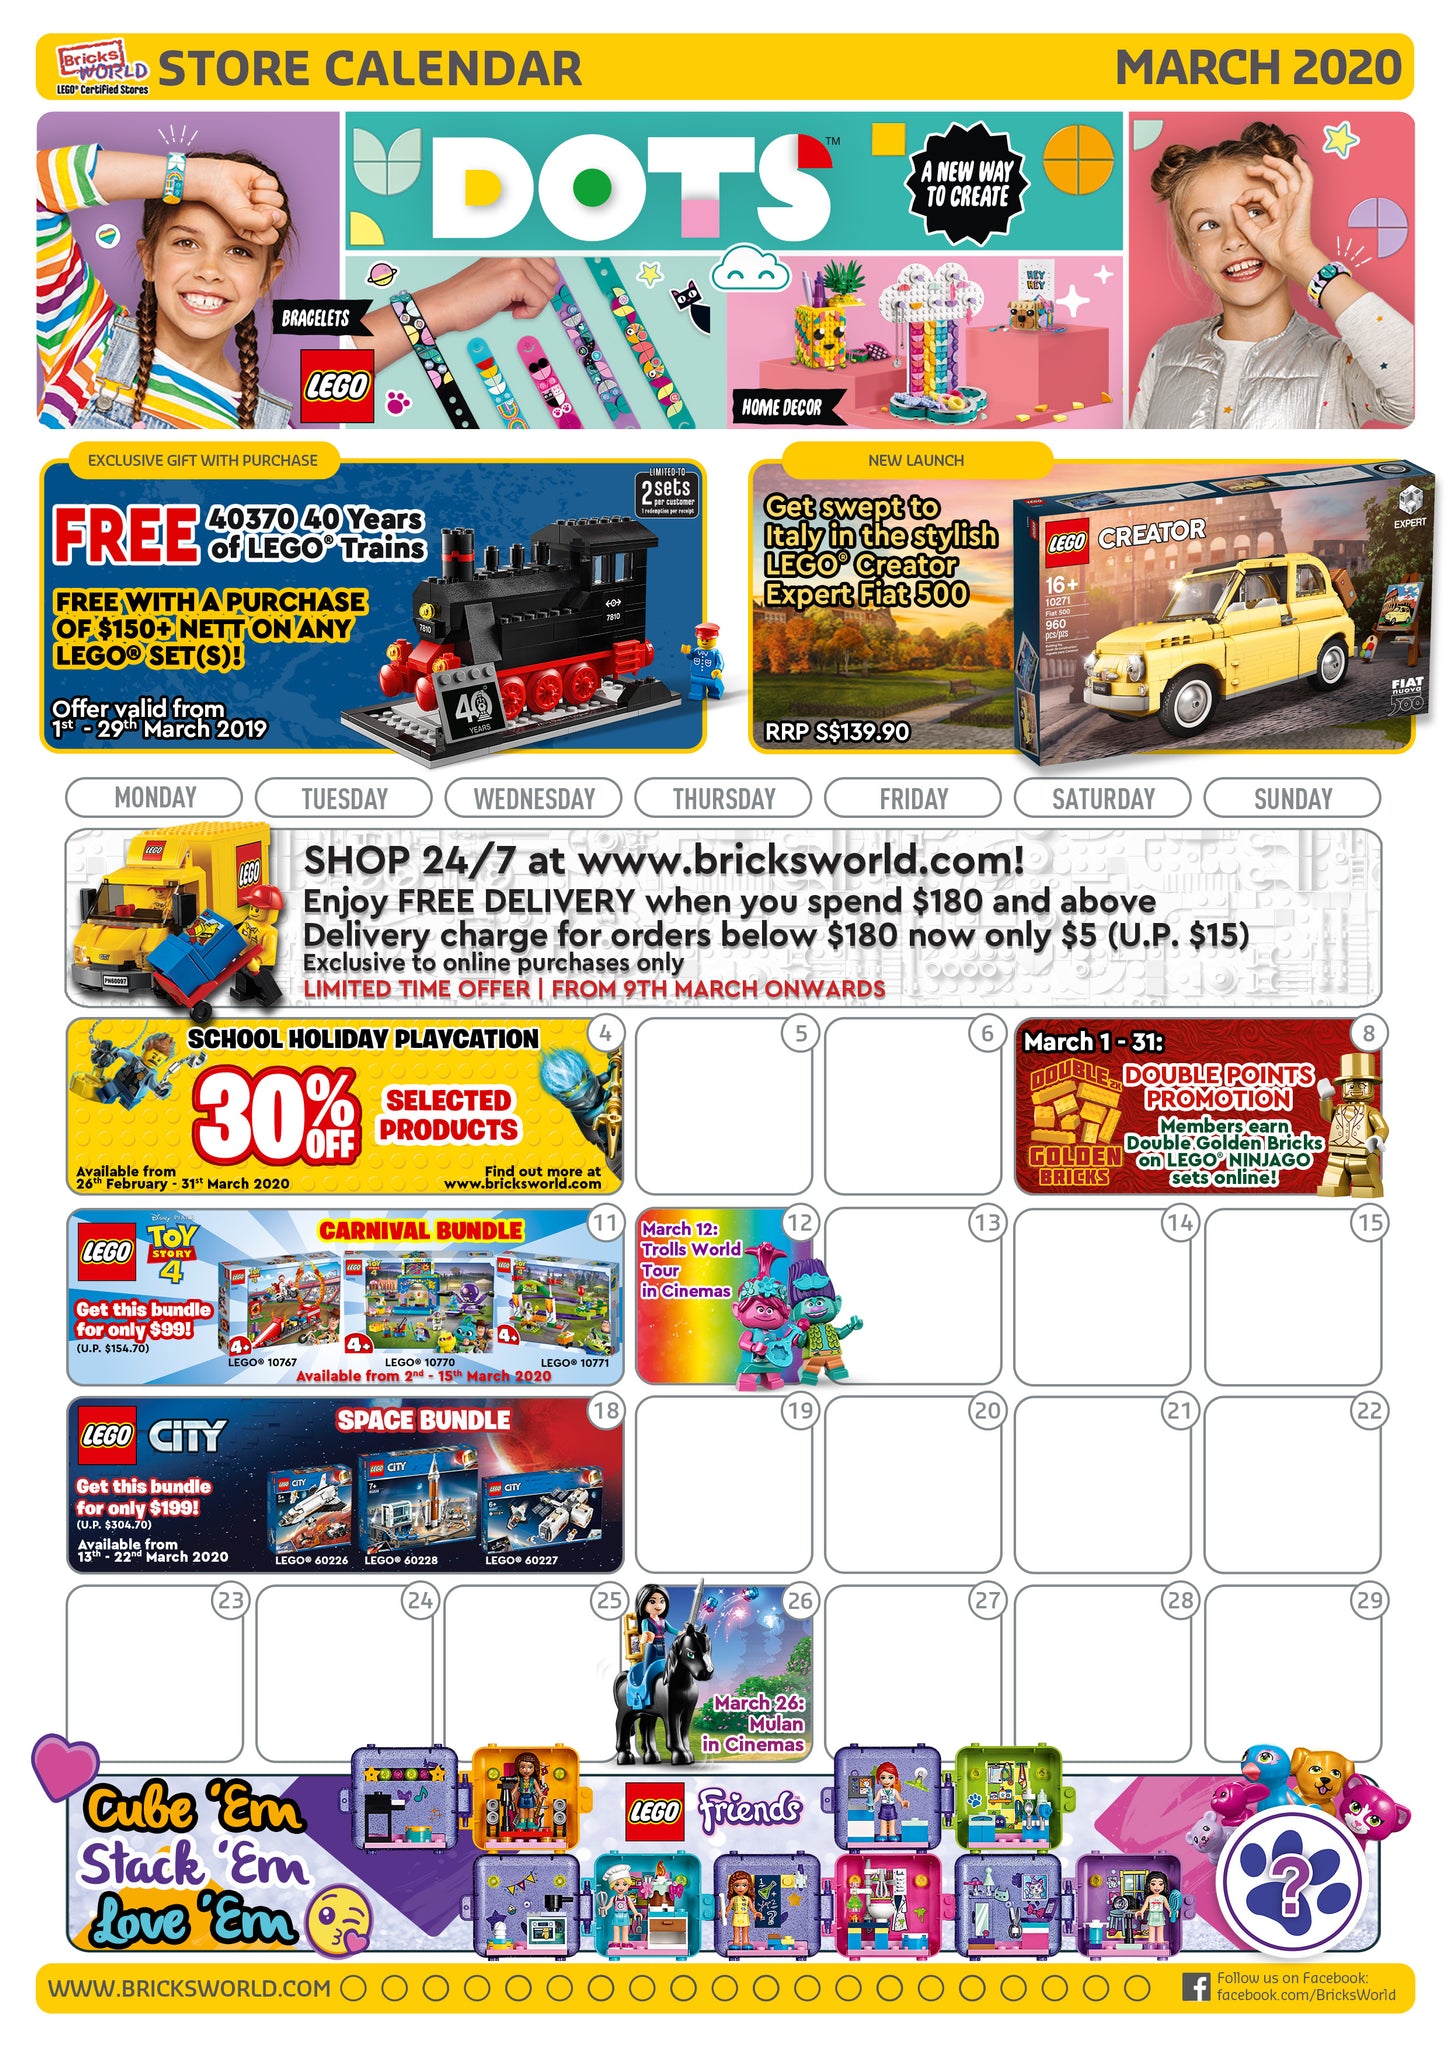 lommetørklæde apotek Vanære LEGO Certified Stores (Bricks World) - March 2020 Store Calendar